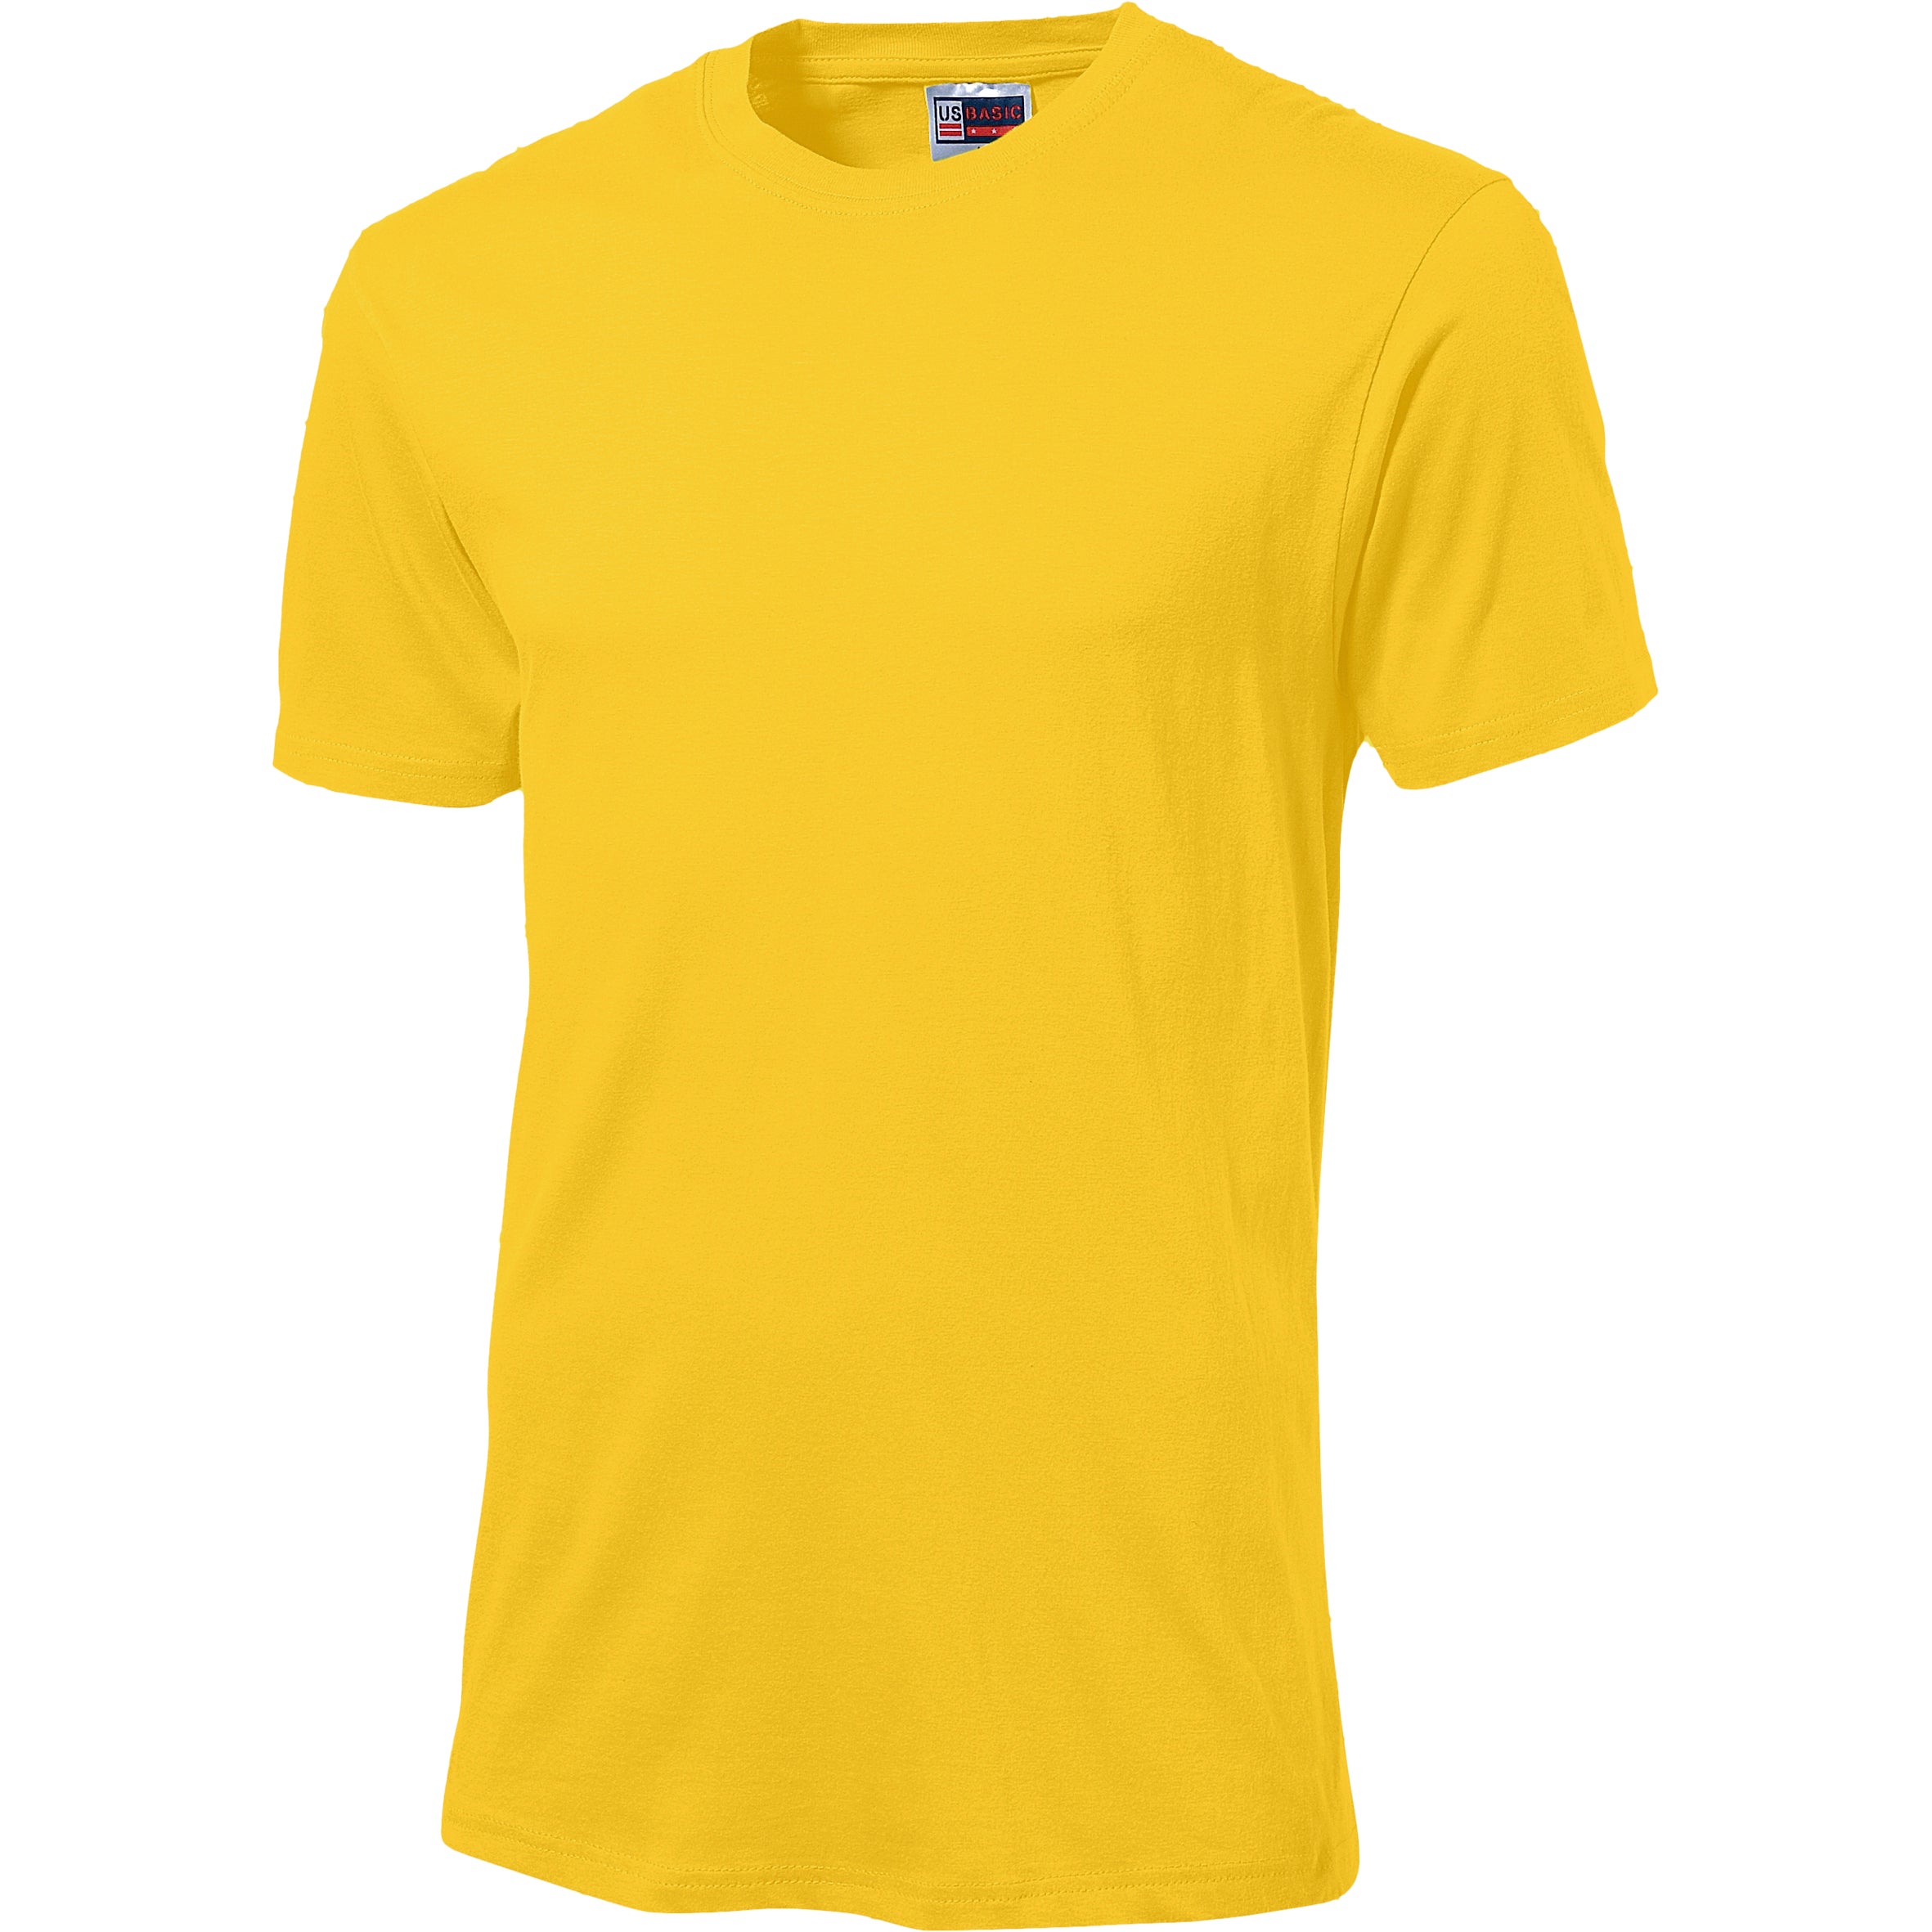 Unisex Super Club 135 T-Shirt L / Yellow / Y